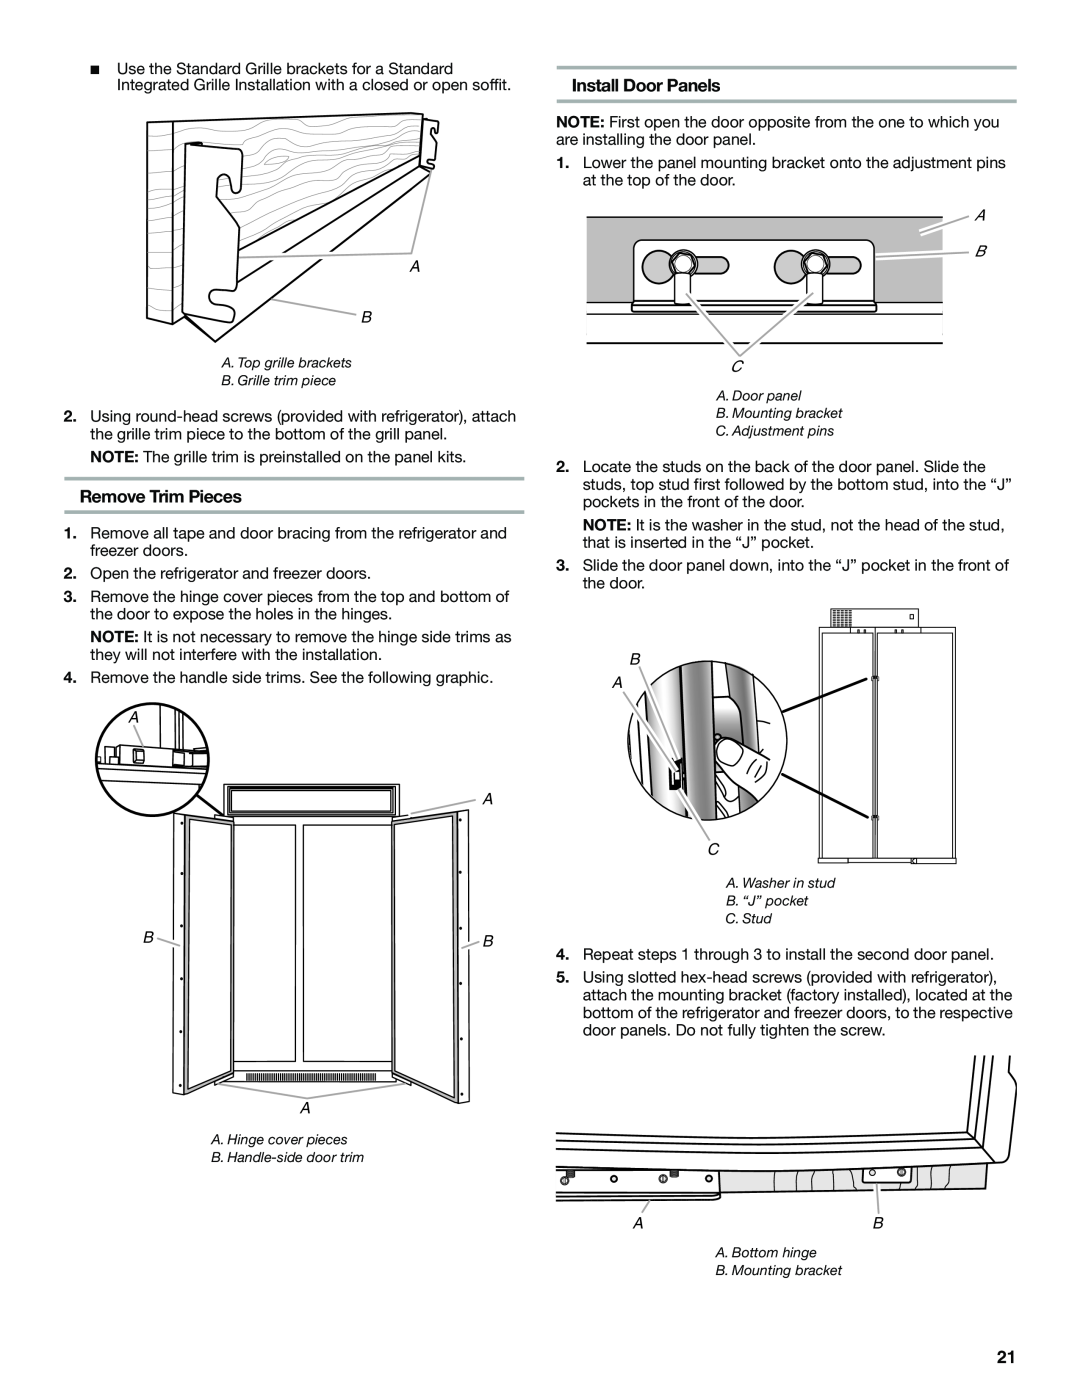 Jenn-Air W10379136B manual Remove Trim Pieces, Install Door Panels, A A B B A, B A C, A B C 